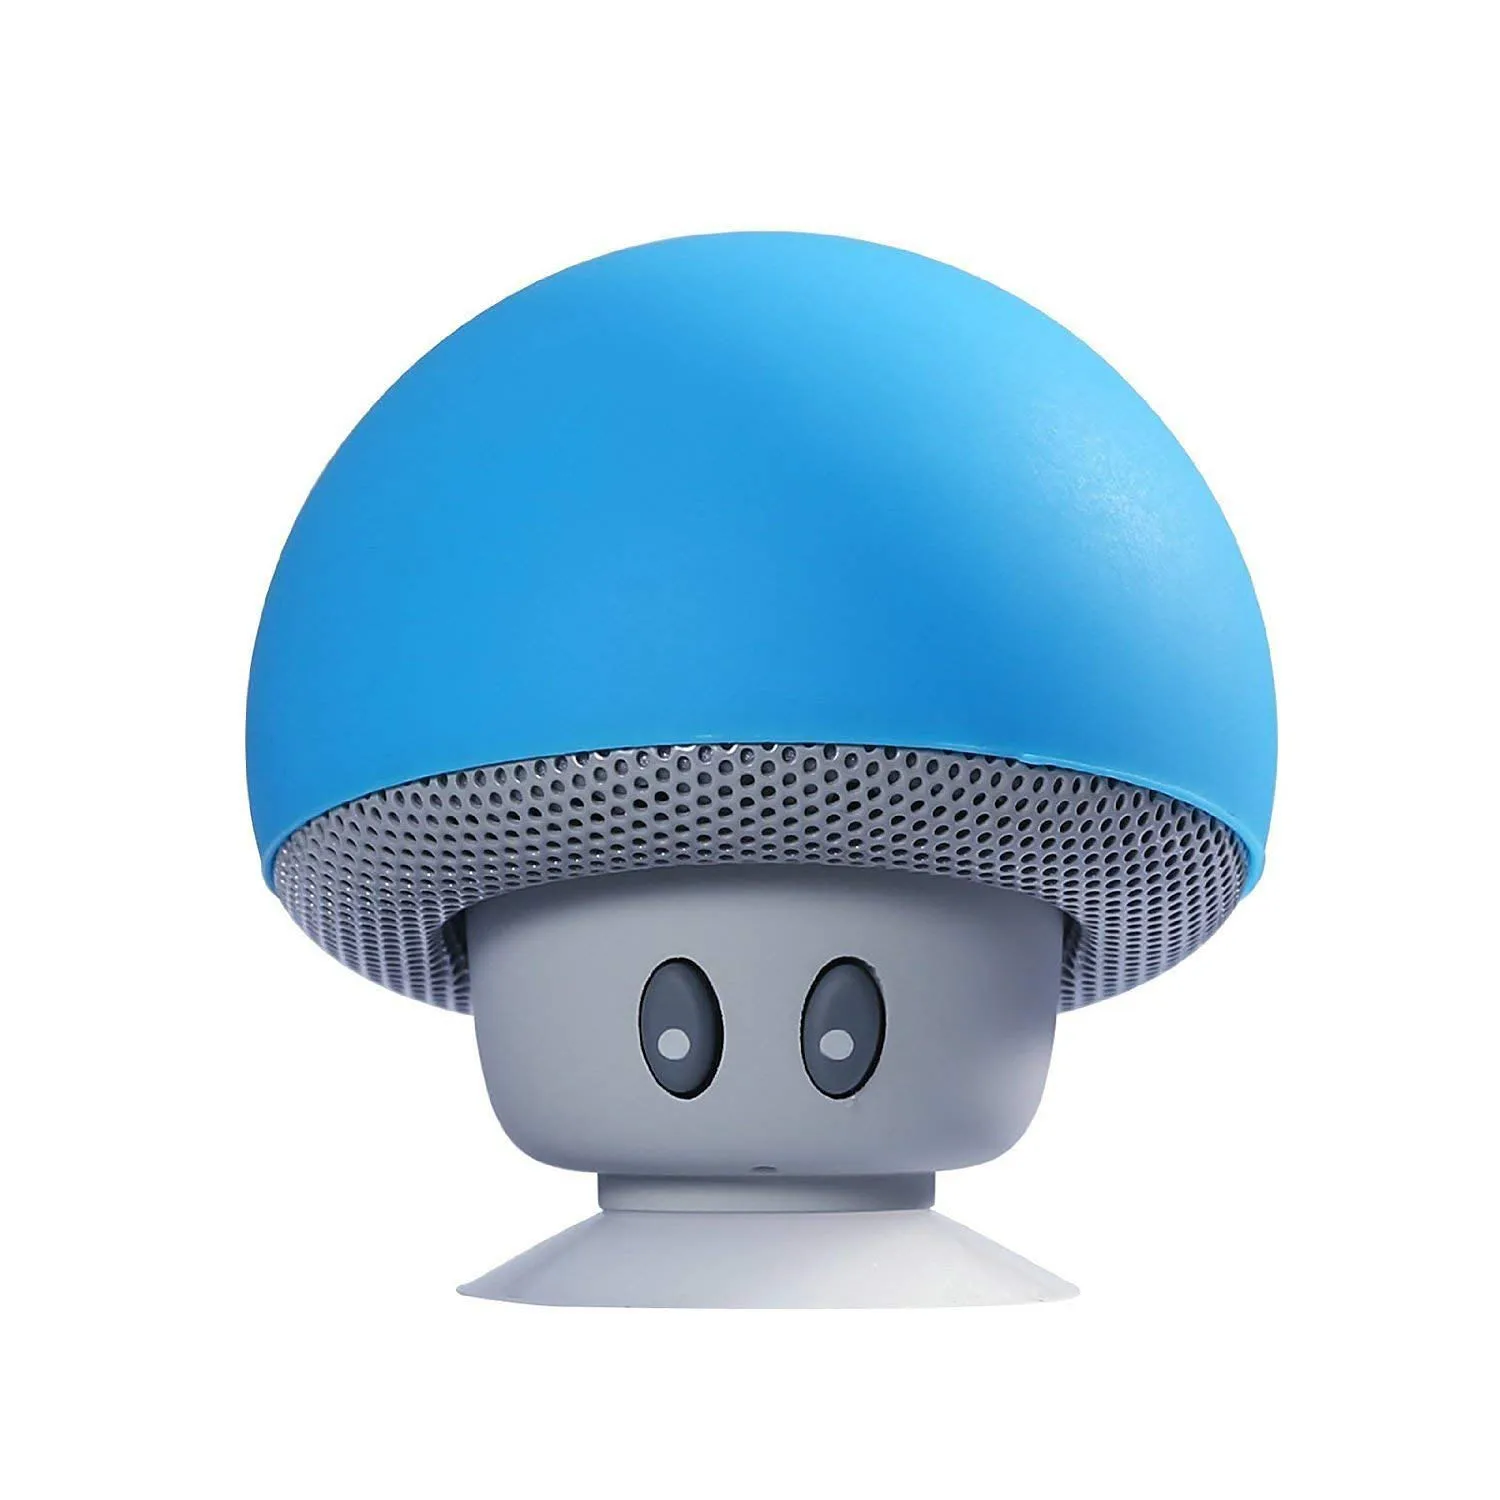 

Wholesale cute mini mushroom wireless portable waterproof shower speaker, can be used as mobile phone holder